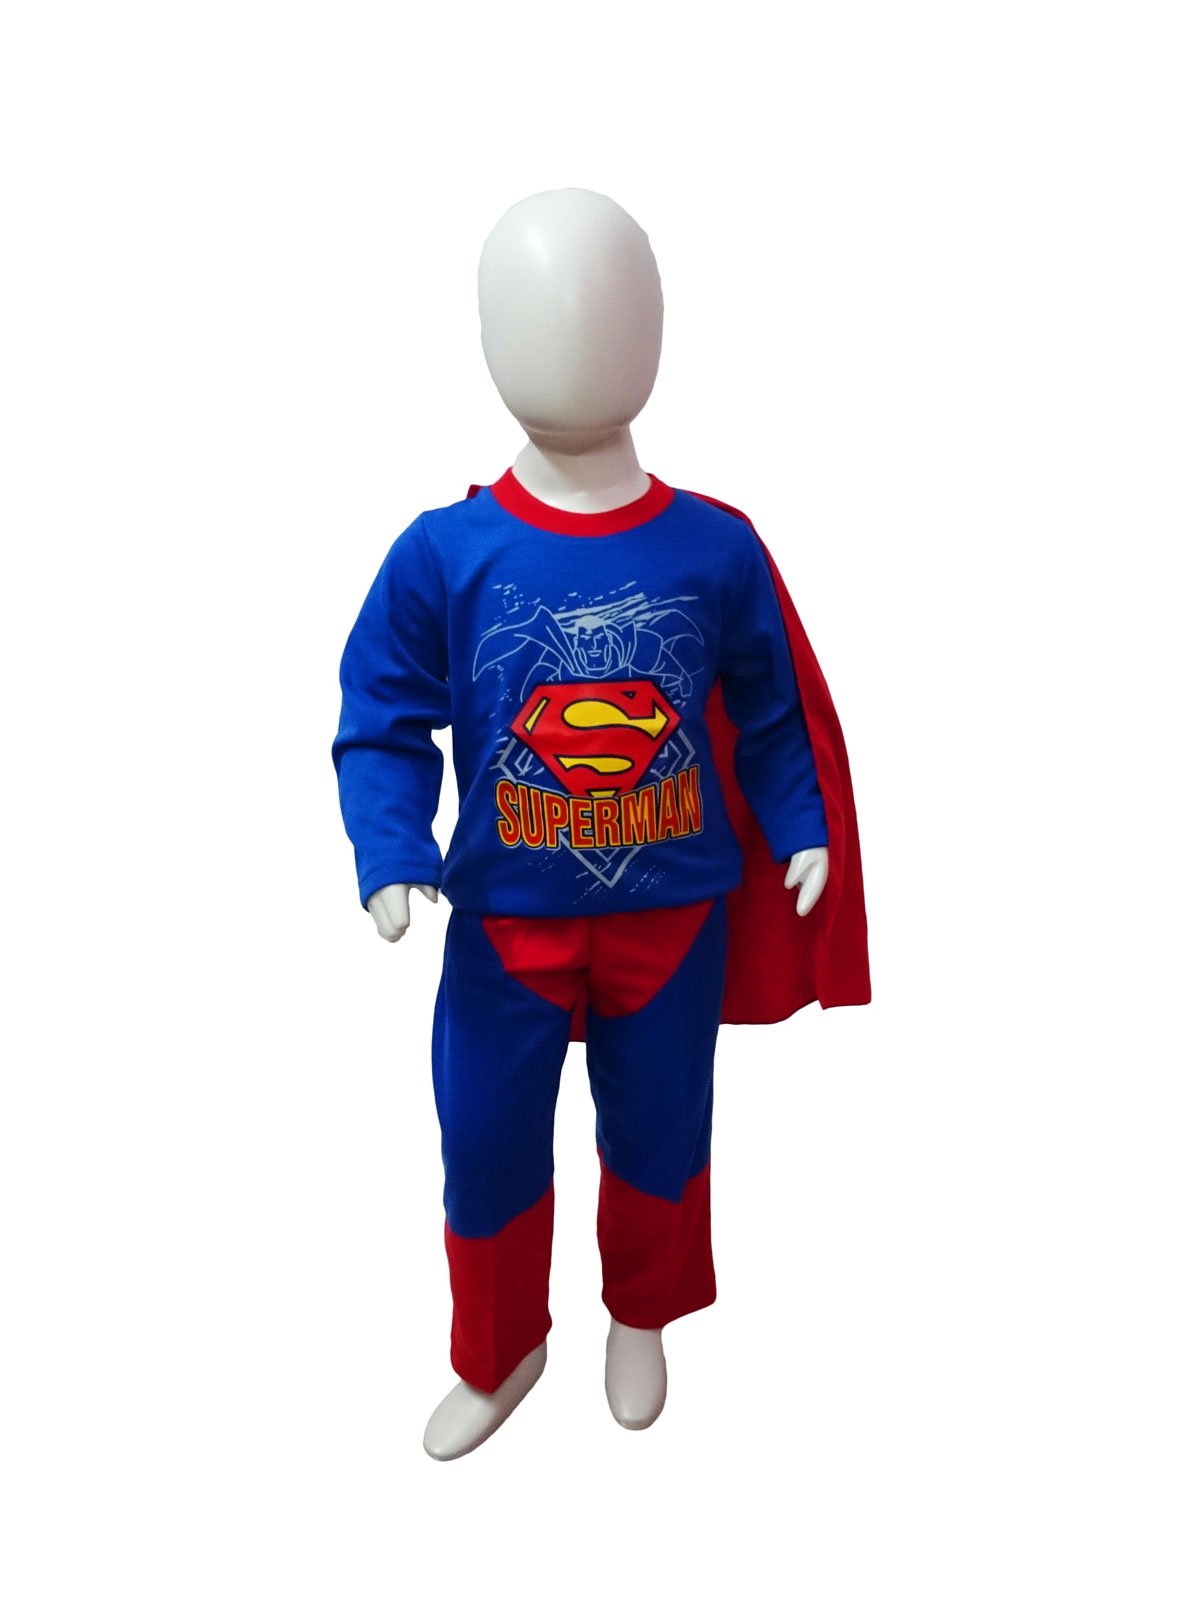 Alice Emporium Superhero Costume Dress for Kids Boys | Halloween Costume | Superman  Dress for Kids Set of 3 (Dress,Cape,Mask) Kids Costume Wear Price in India  - Buy Alice Emporium Superhero Costume